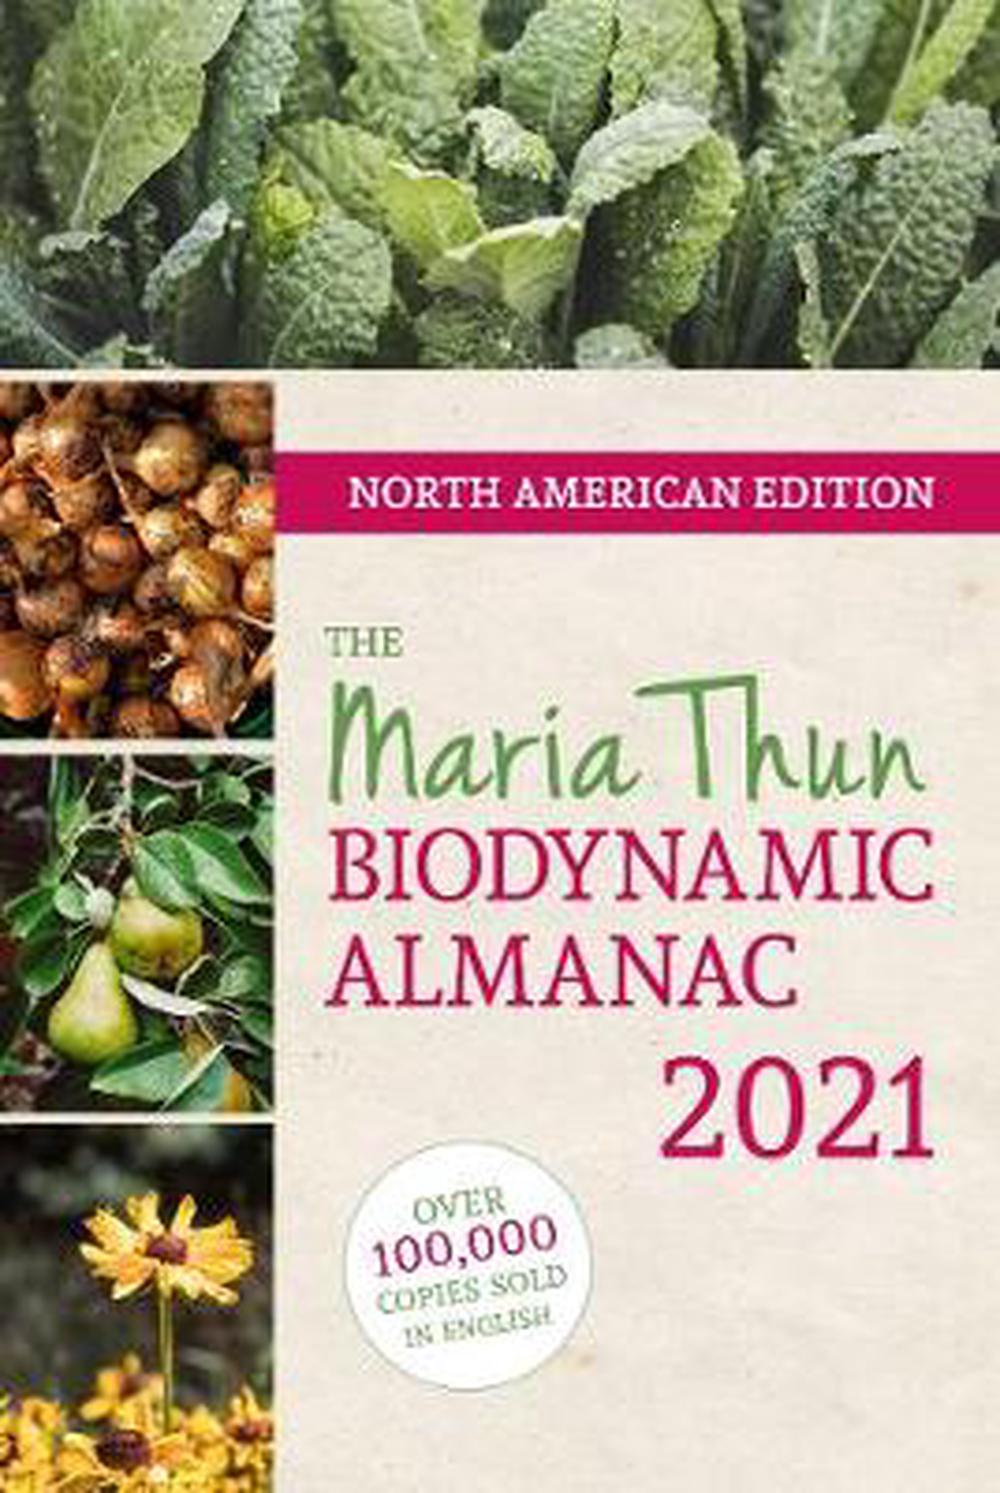 north-american-maria-thun-biodynamic-almanac-by-matthias-thun-paperback-9781782506539-buy